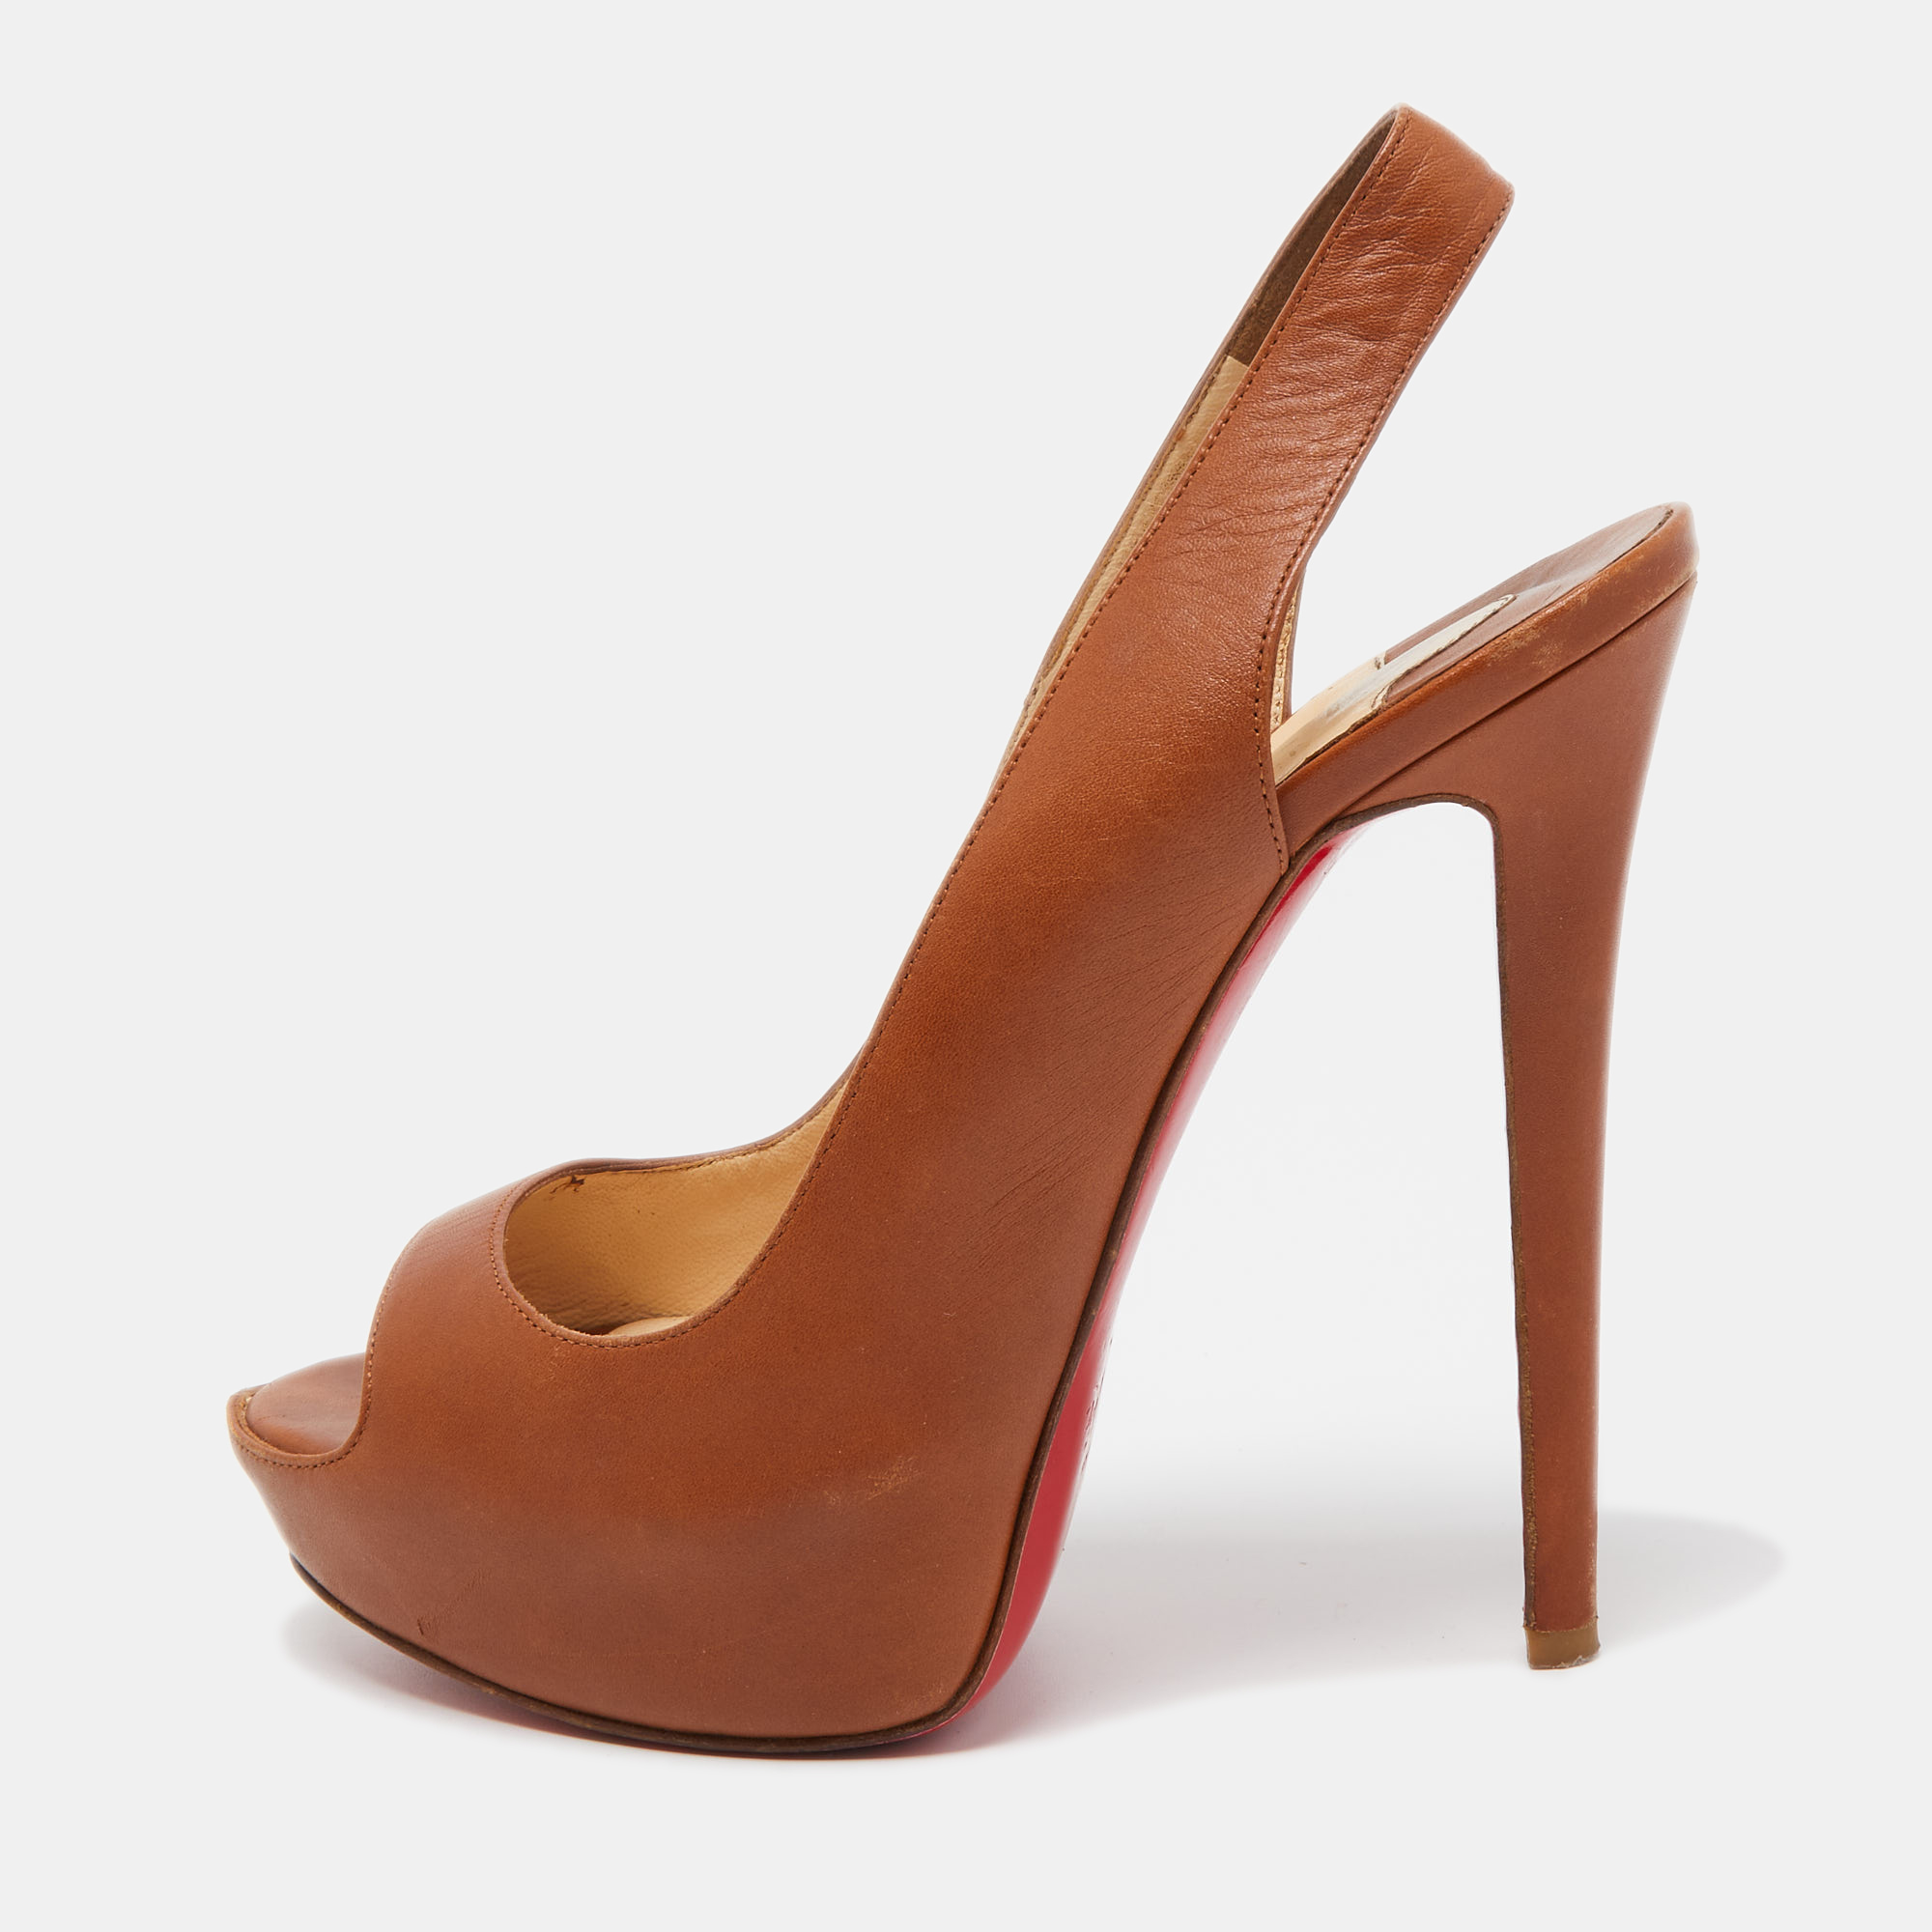 Christian louboutin brown leather peep toe platform slingback sandals size 37